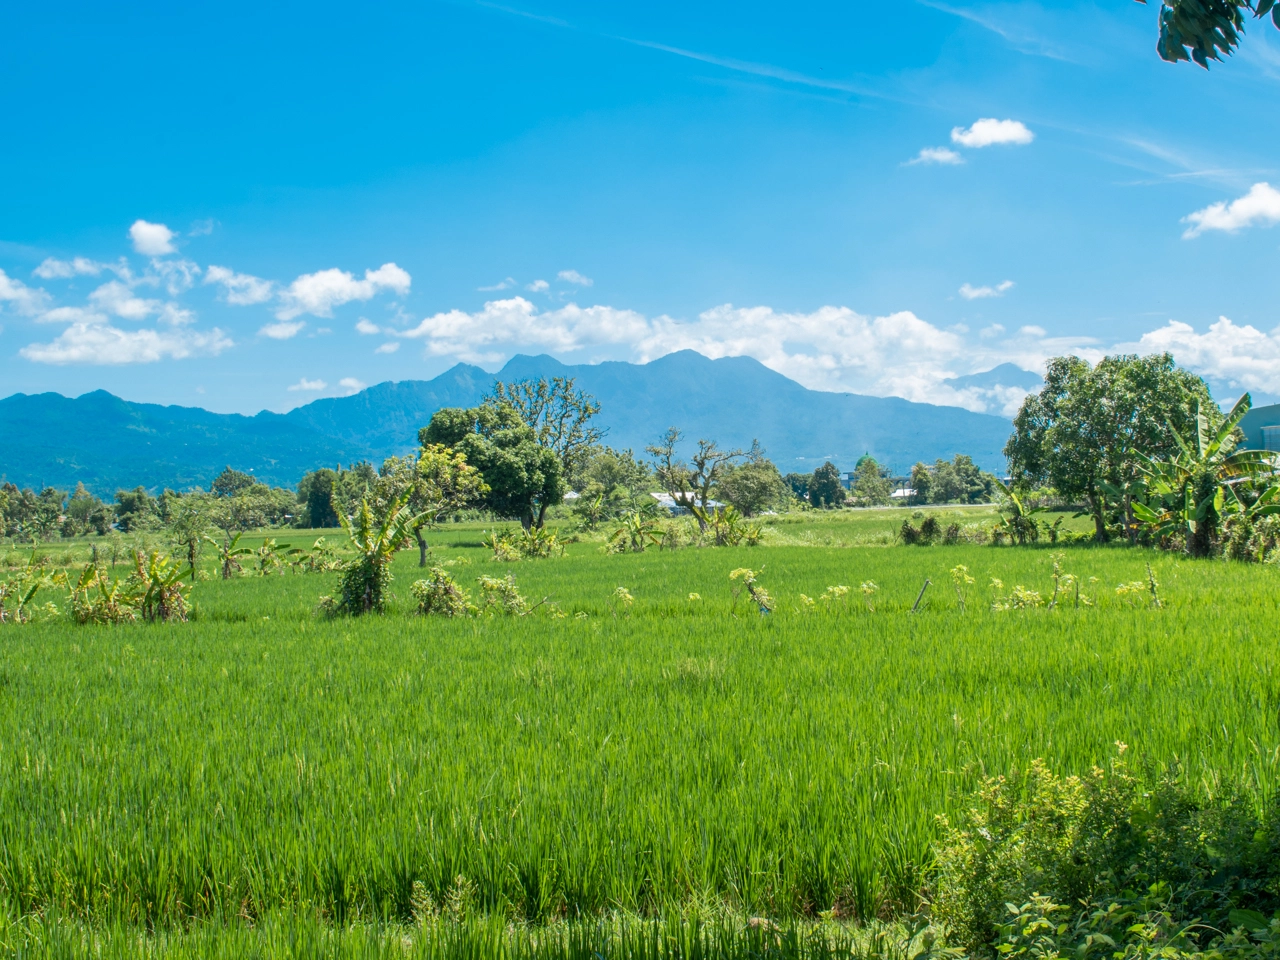 bali rice fields